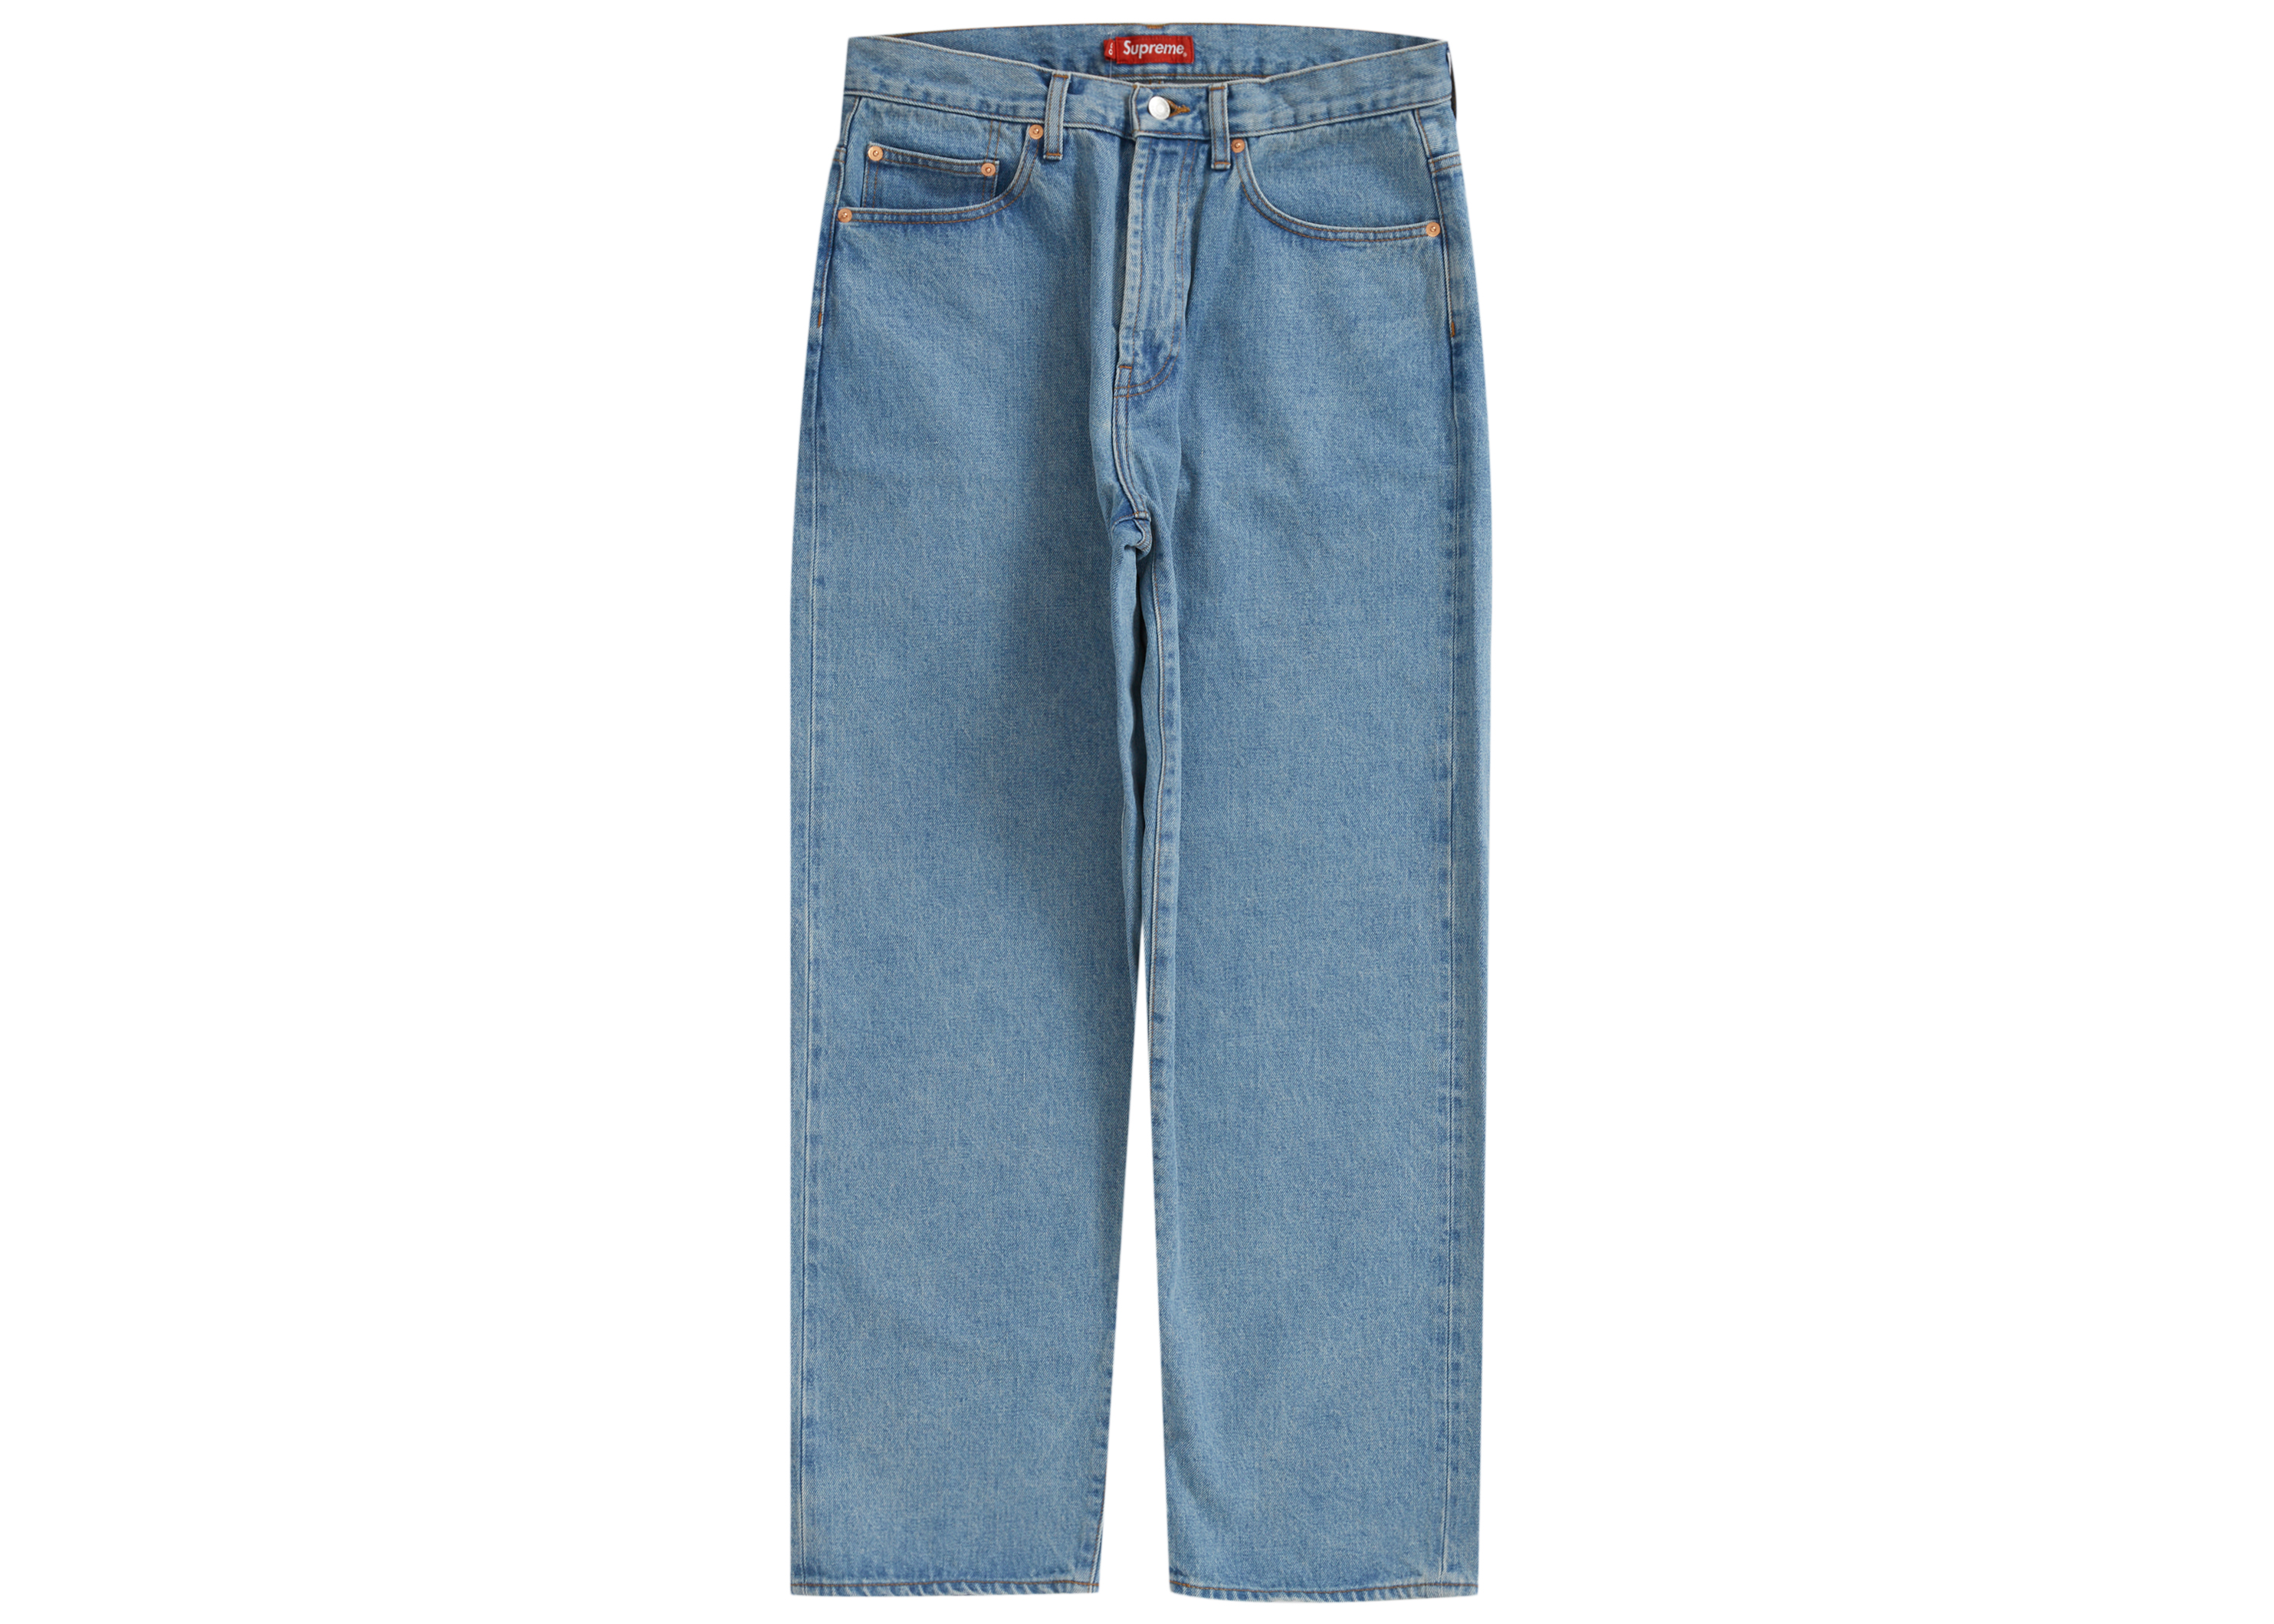 Supreme baggy jeans 22aw | labiela.com